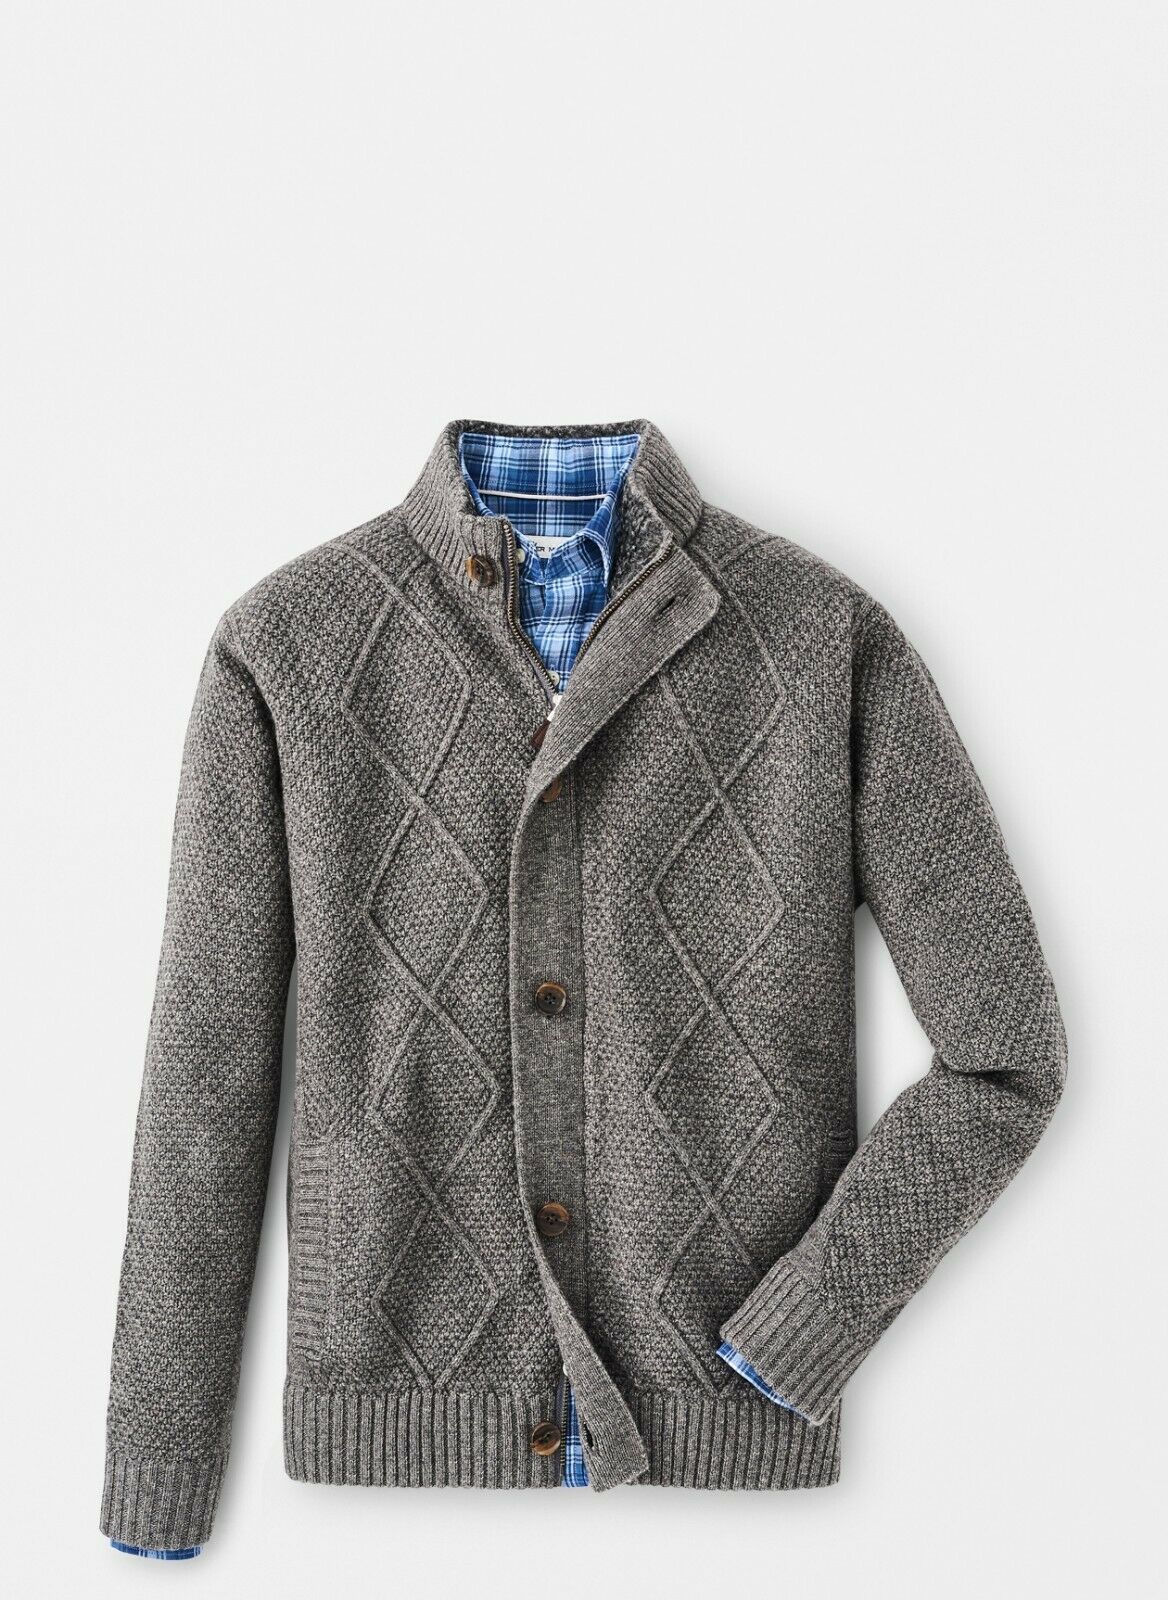 <br>Color: Grays<br>Size Type: Regular<br>Size (Men's): S<br>Style: Cardigan<br>Material: Wool Blends